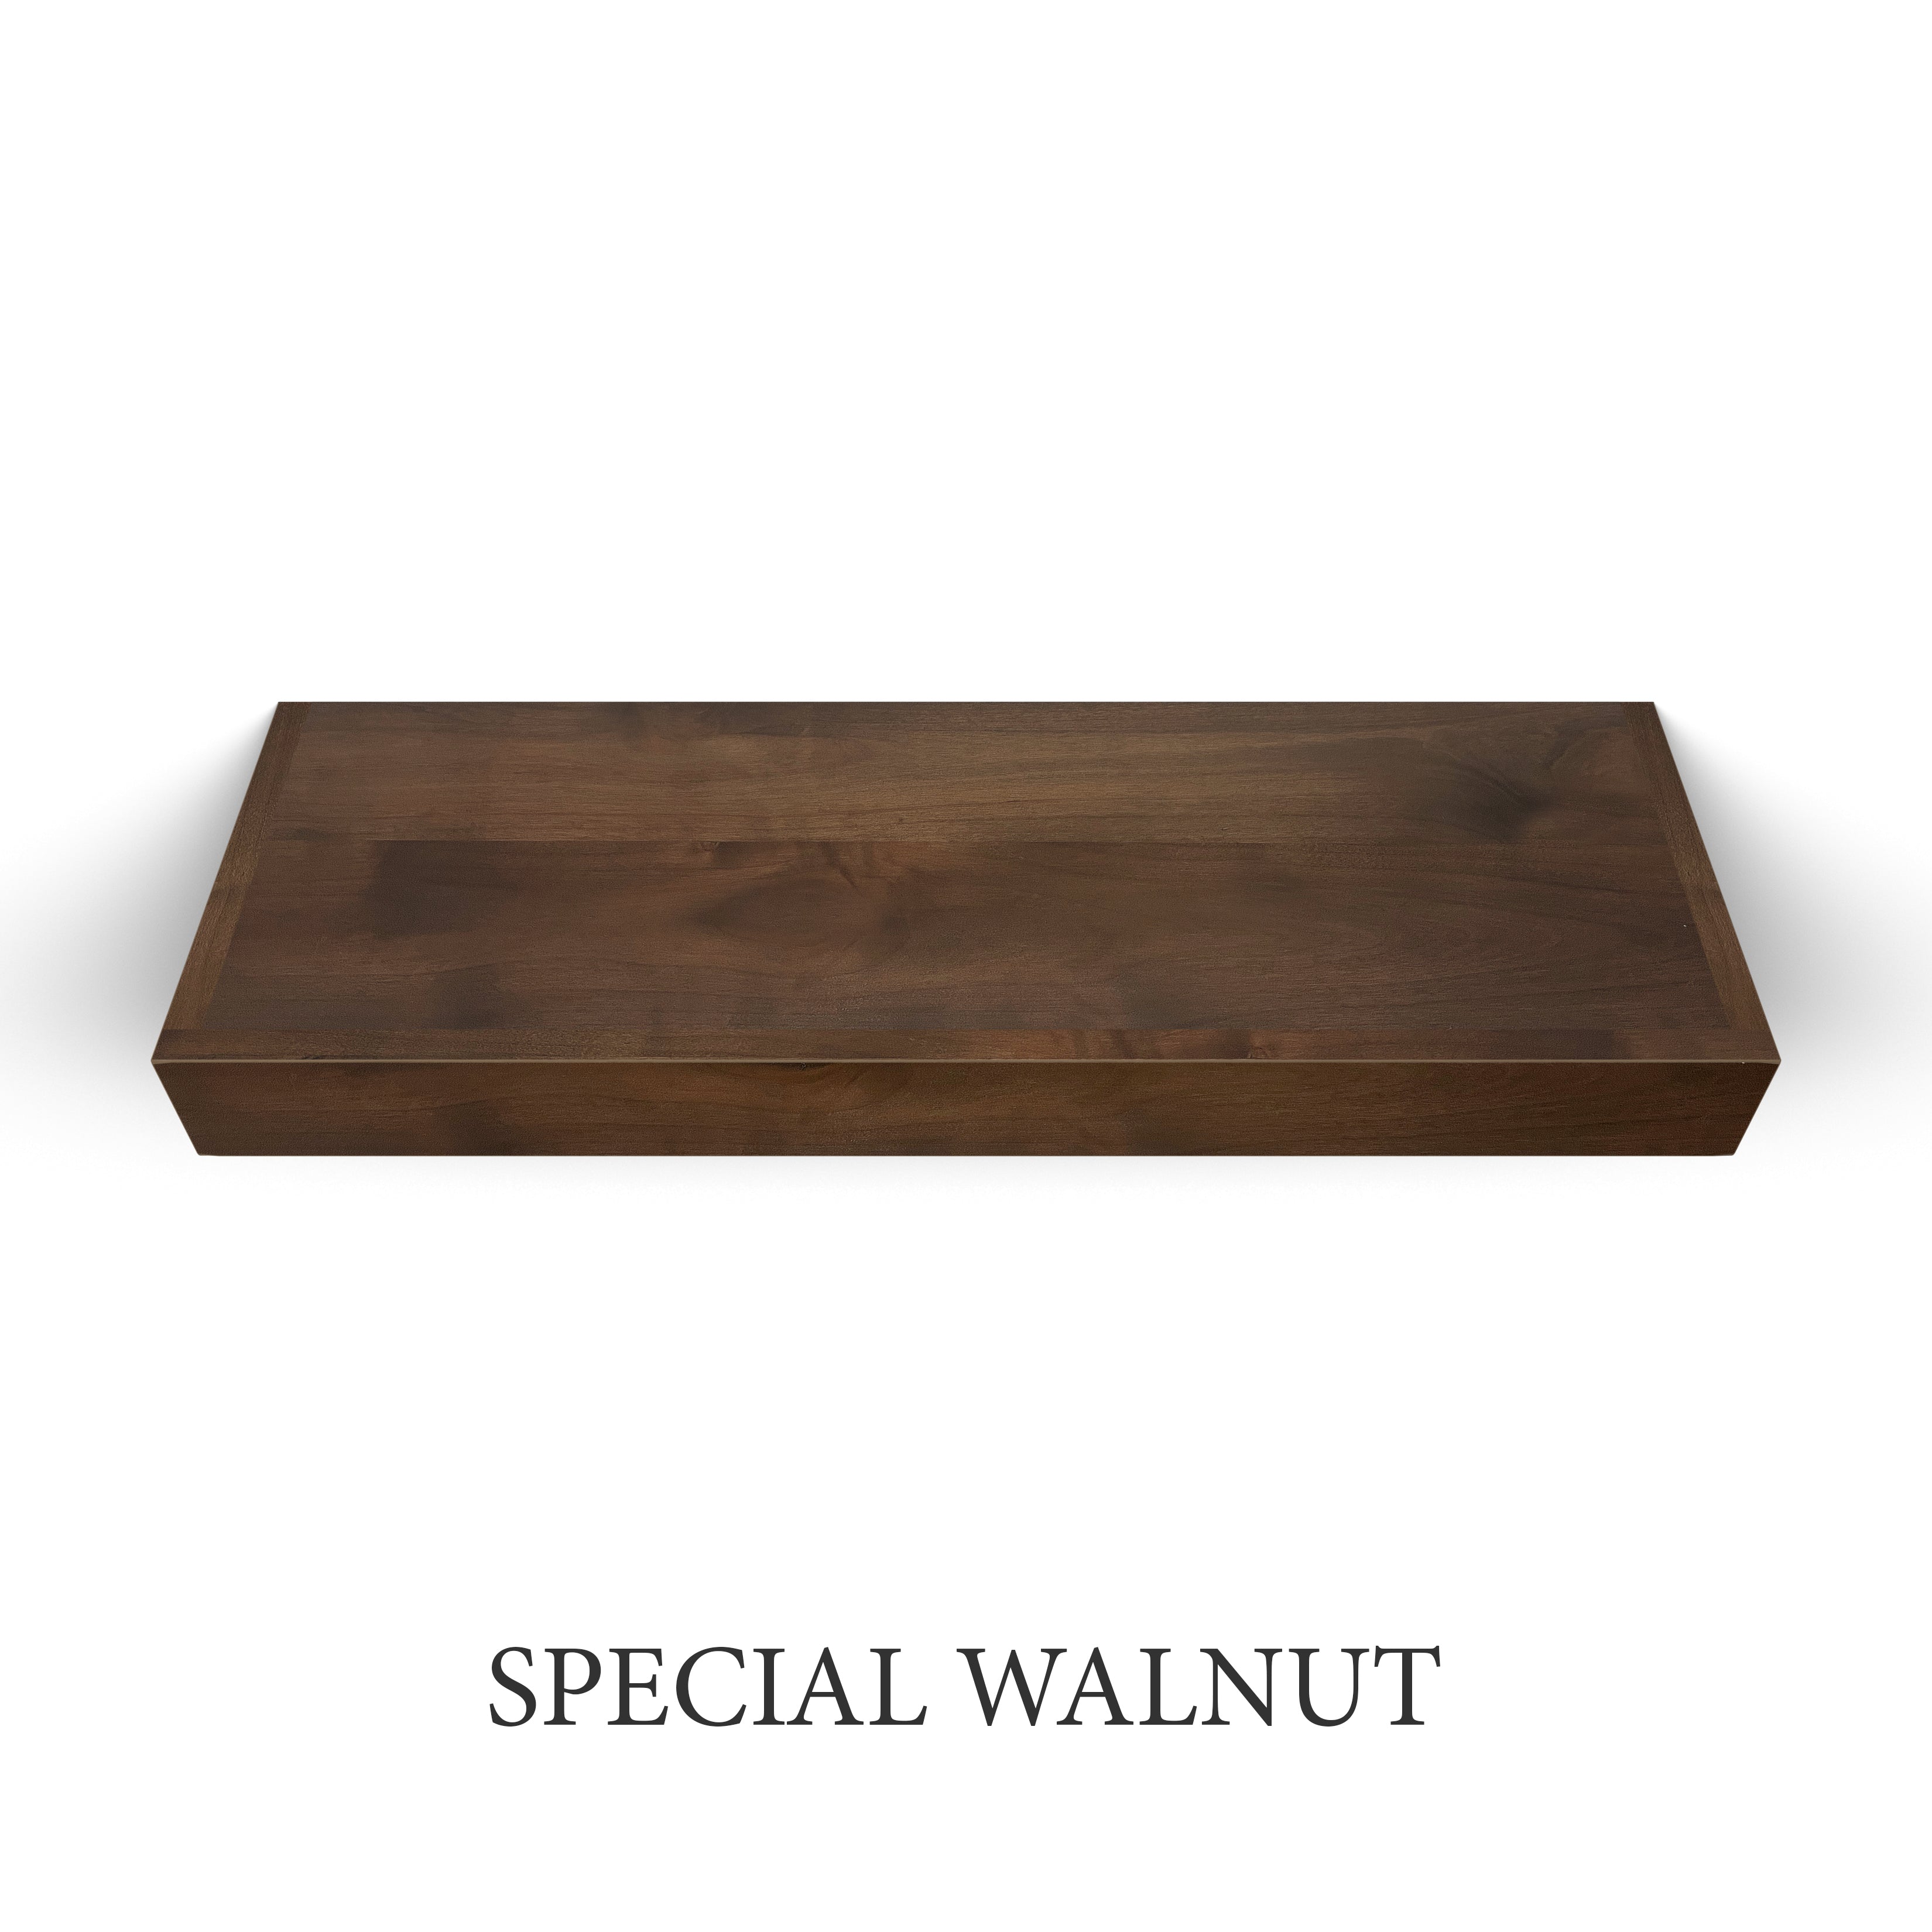 special walnut Superior Alder 3 Inch Thick Floating Shelf